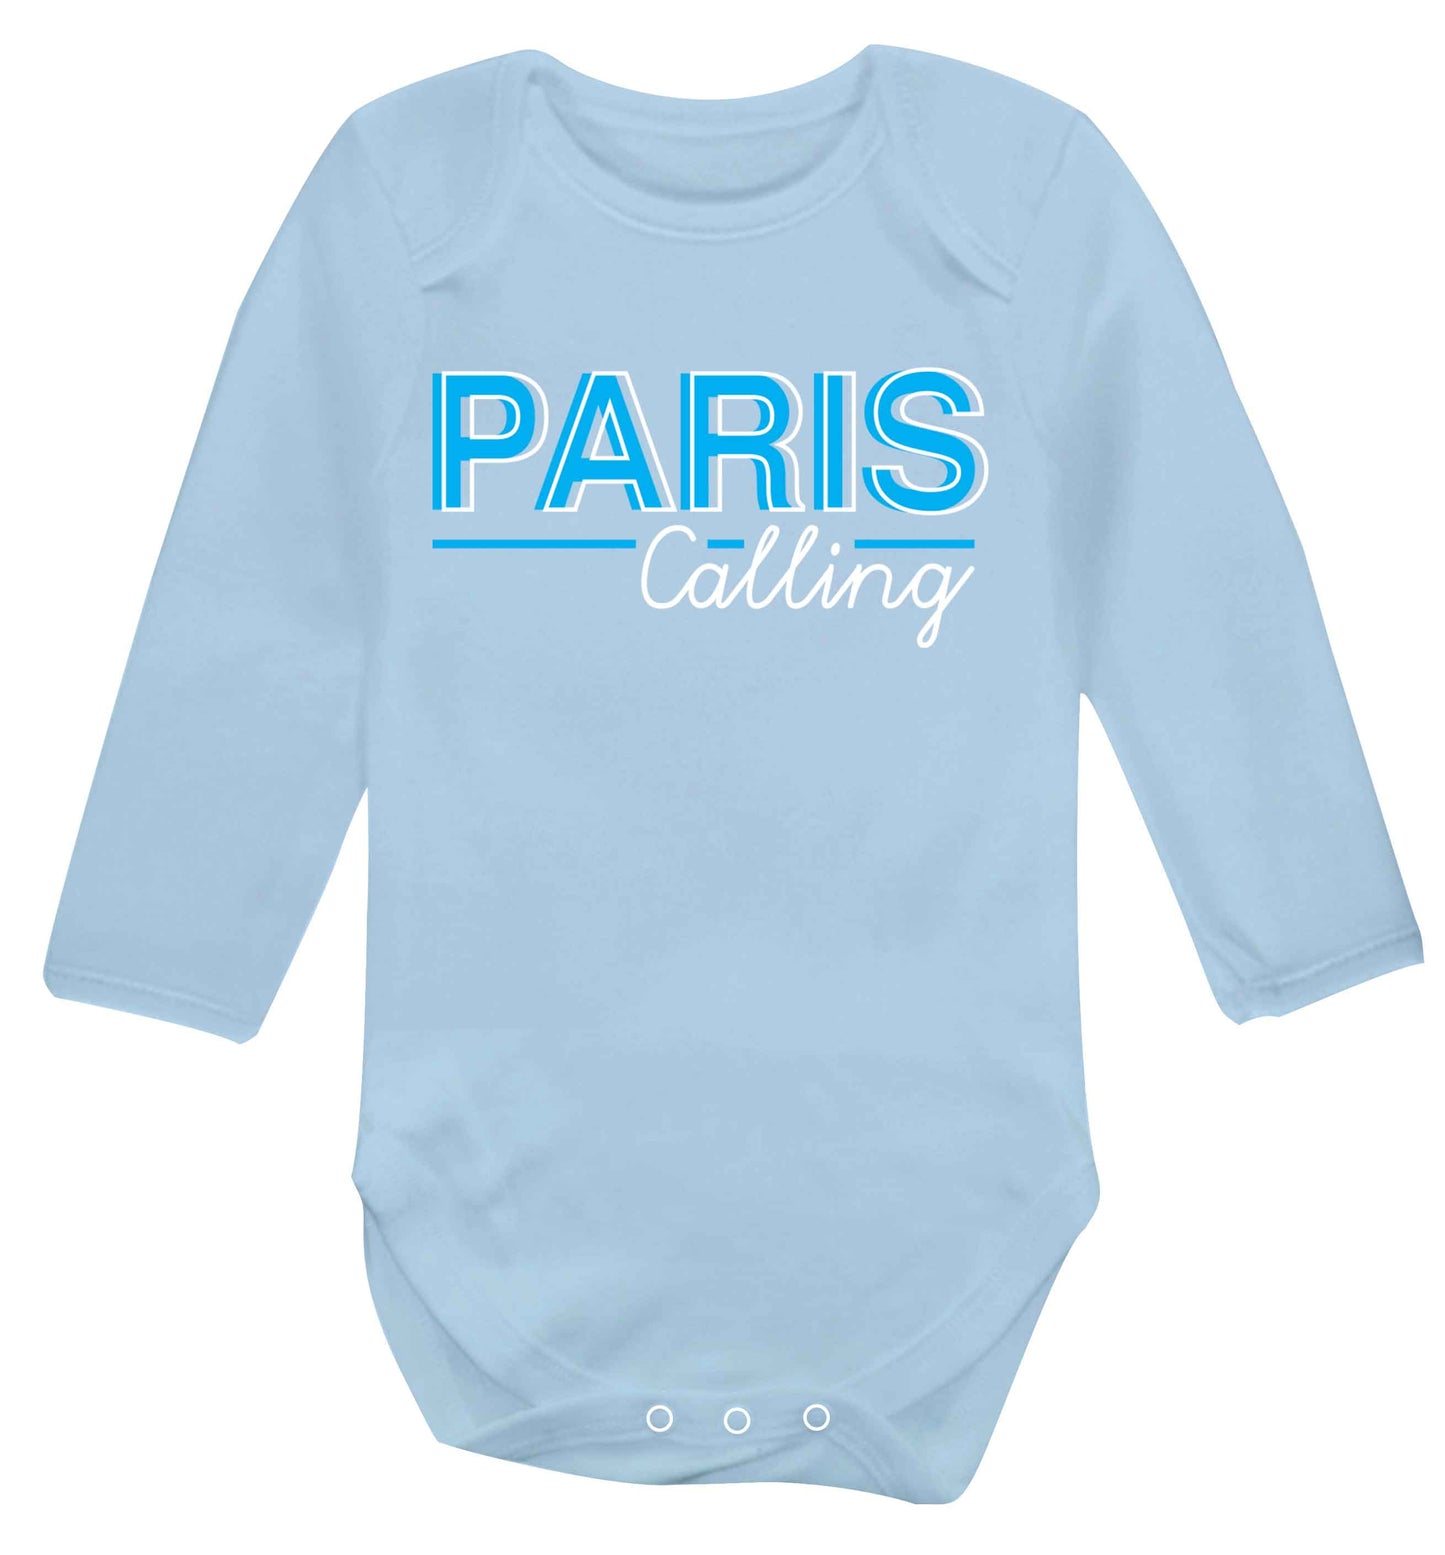 Paris calling Baby Vest long sleeved pale blue 6-12 months